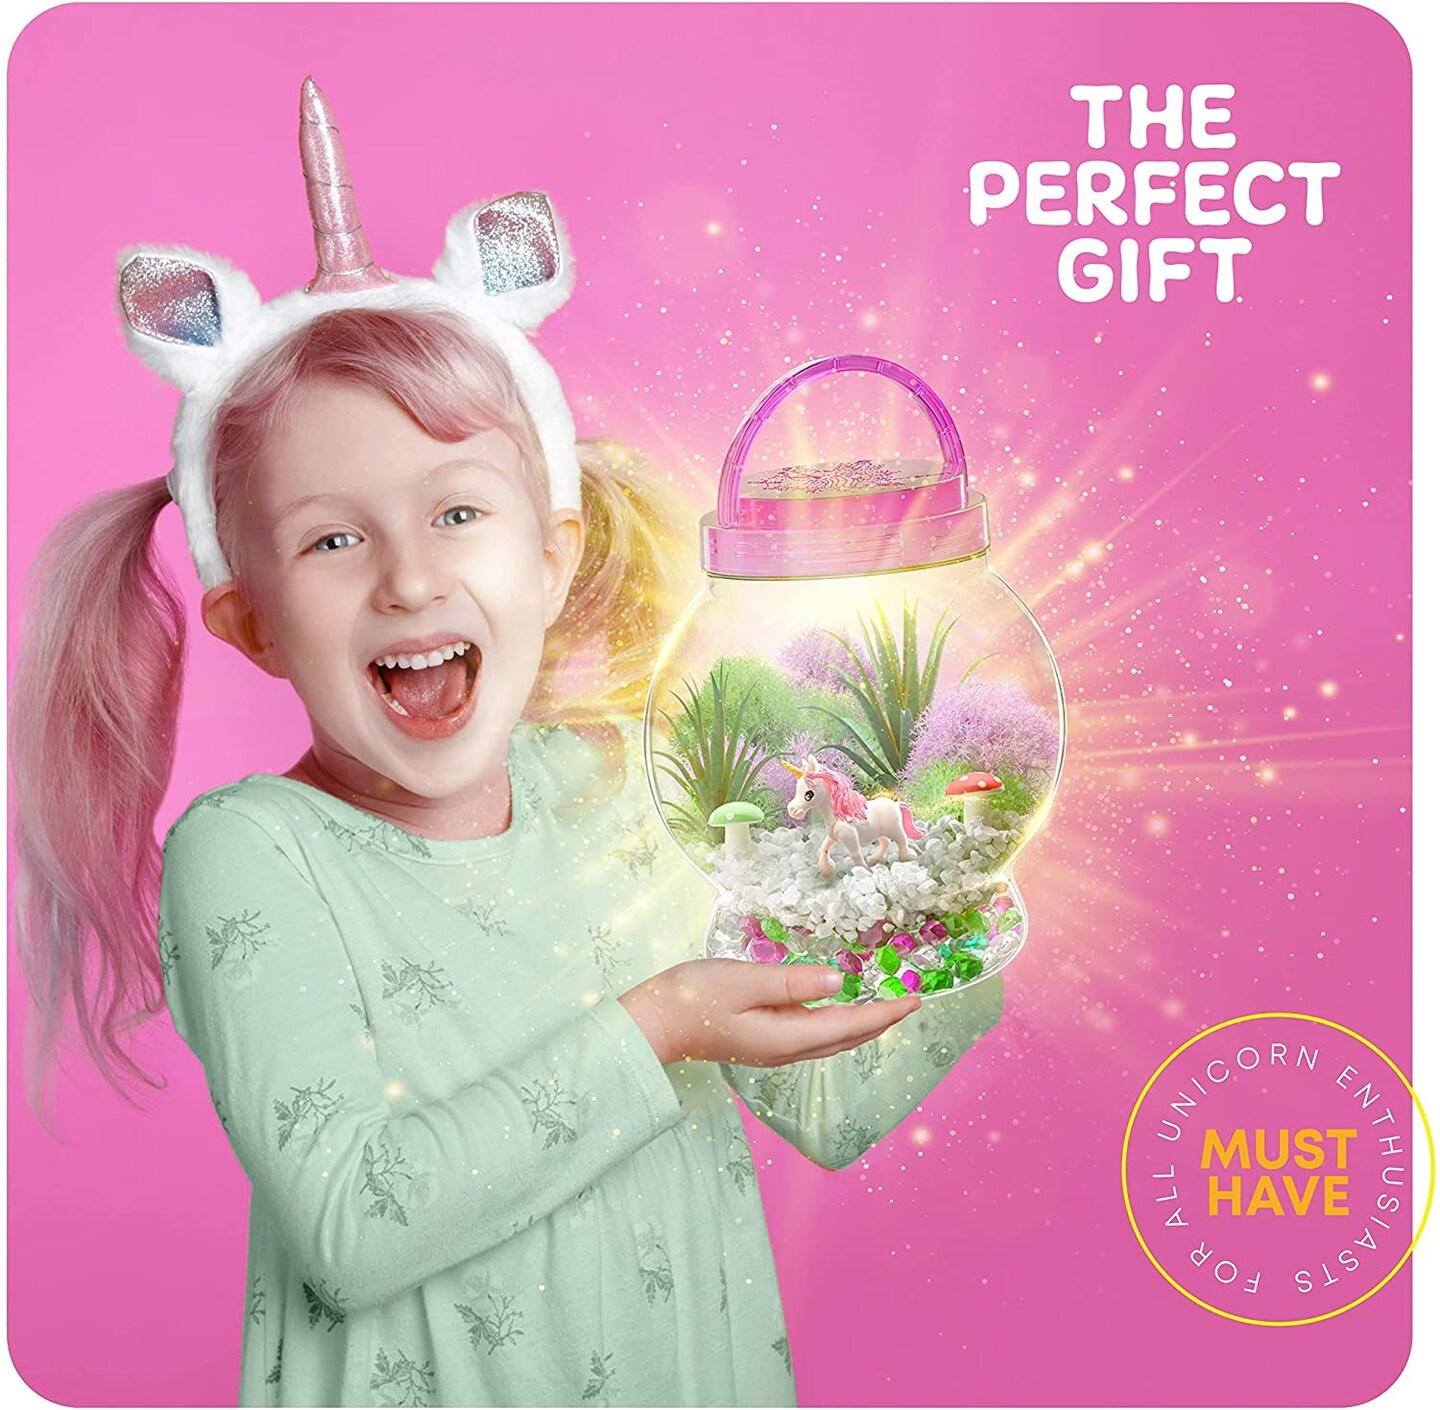 Light-Up Unicorn Terrarium Kit for Kids - Kids Birthday Gifts for Kids - Best Unicorn Toys &#x26; Activities Kits Presents - Arts &#x26; Crafts Stuff for Little Girls &#x26; Boys